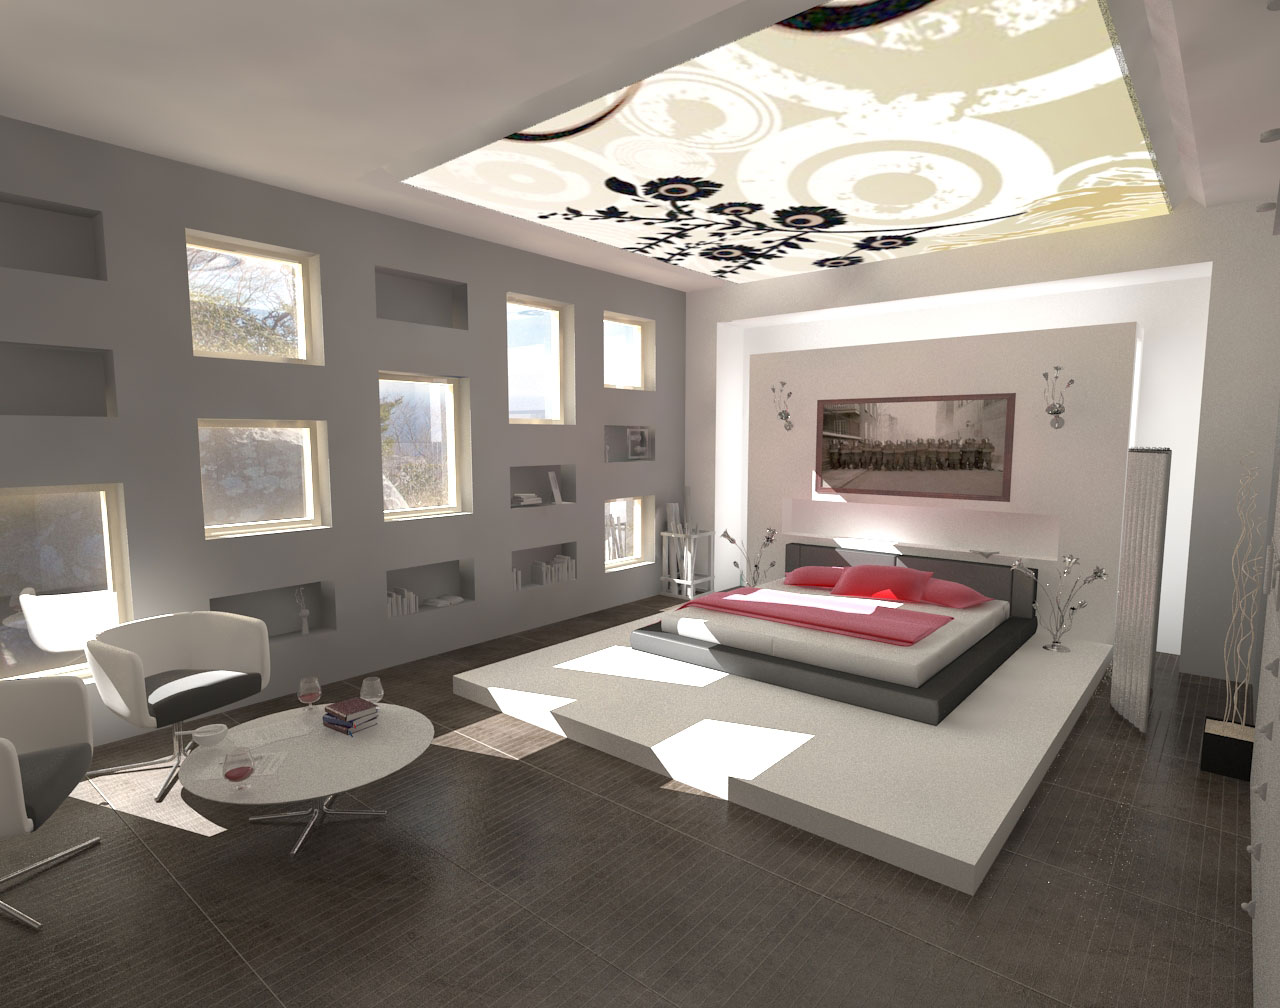 https://blogger.googleusercontent.com/img/b/R29vZ2xl/AVvXsEj_N8r3cf9xlLNT-C8l9j-RplWlDY_4xmuID1q1HME4V7pAX3BrpQRHHCjbUCLcv95IFcdaZ5Nt7ZDc5fa29zM7oBF1hsA543p6ZsTrC8Ct553GnT1TZgiIhdSX3Y0CewnSqyvYmPDUTrU/s1600/contemporary-luxury-master-bedroom.jpg